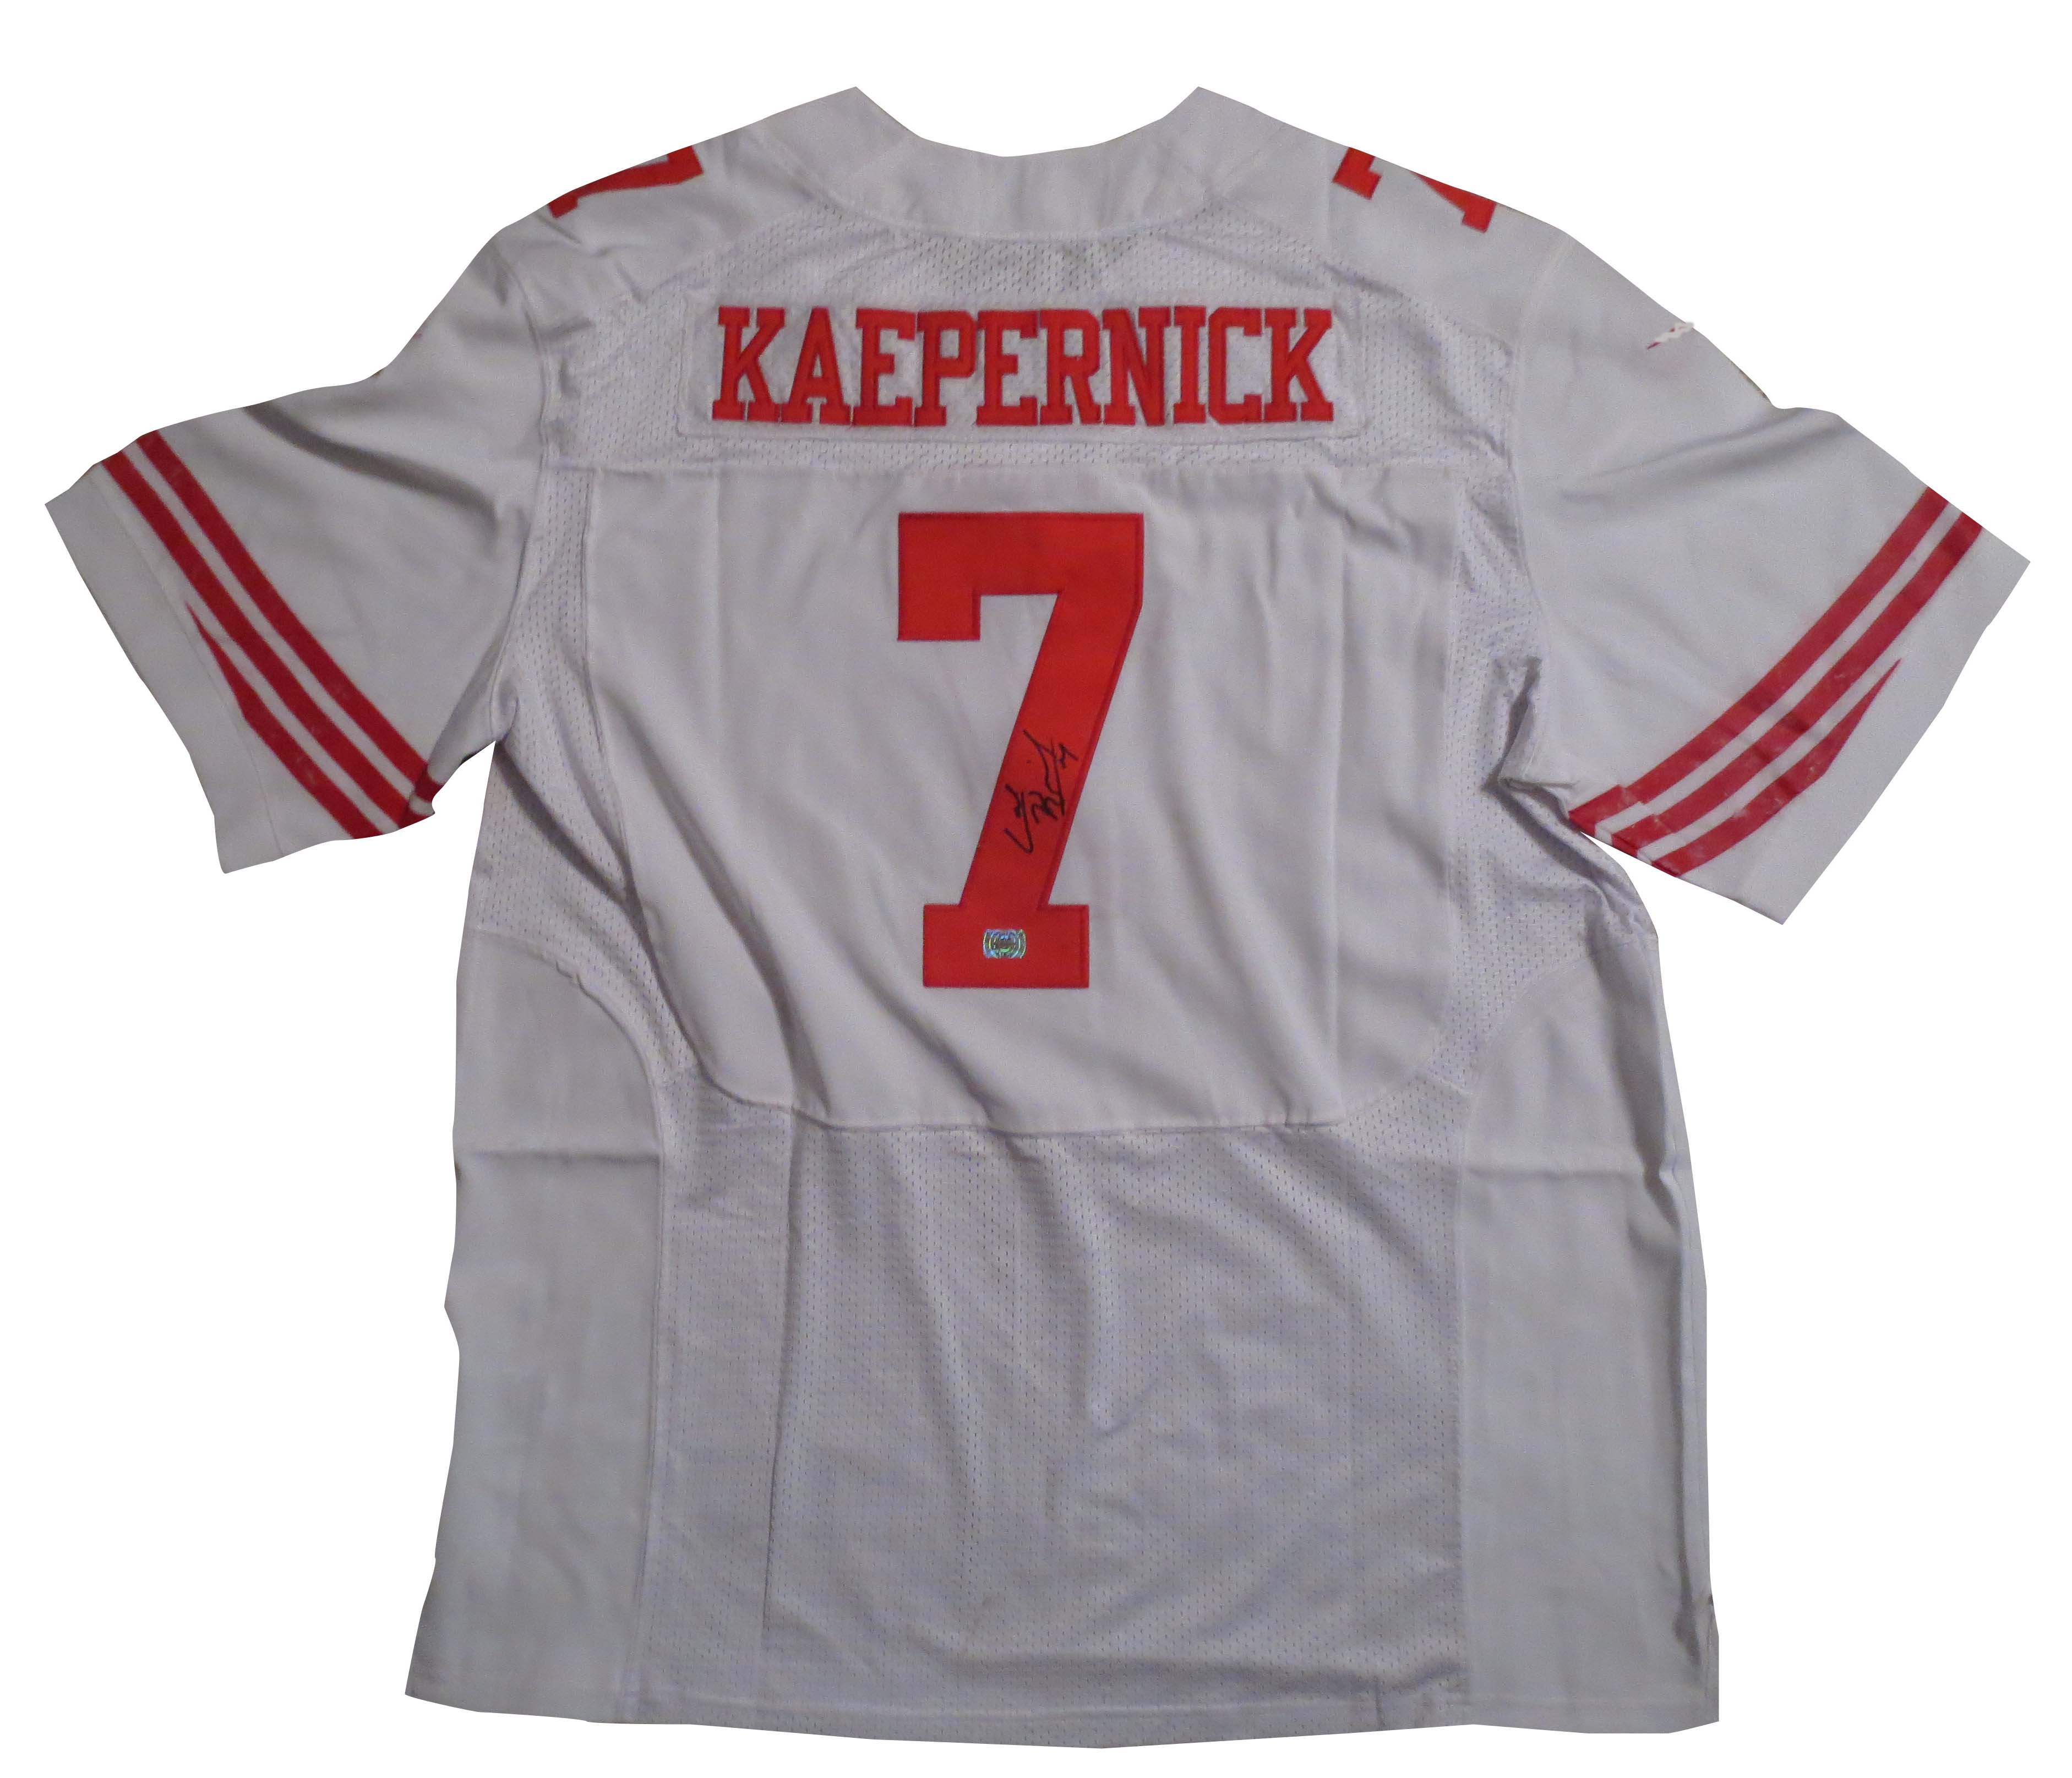 Colin Kaepernick Signed 49ers Jersey 